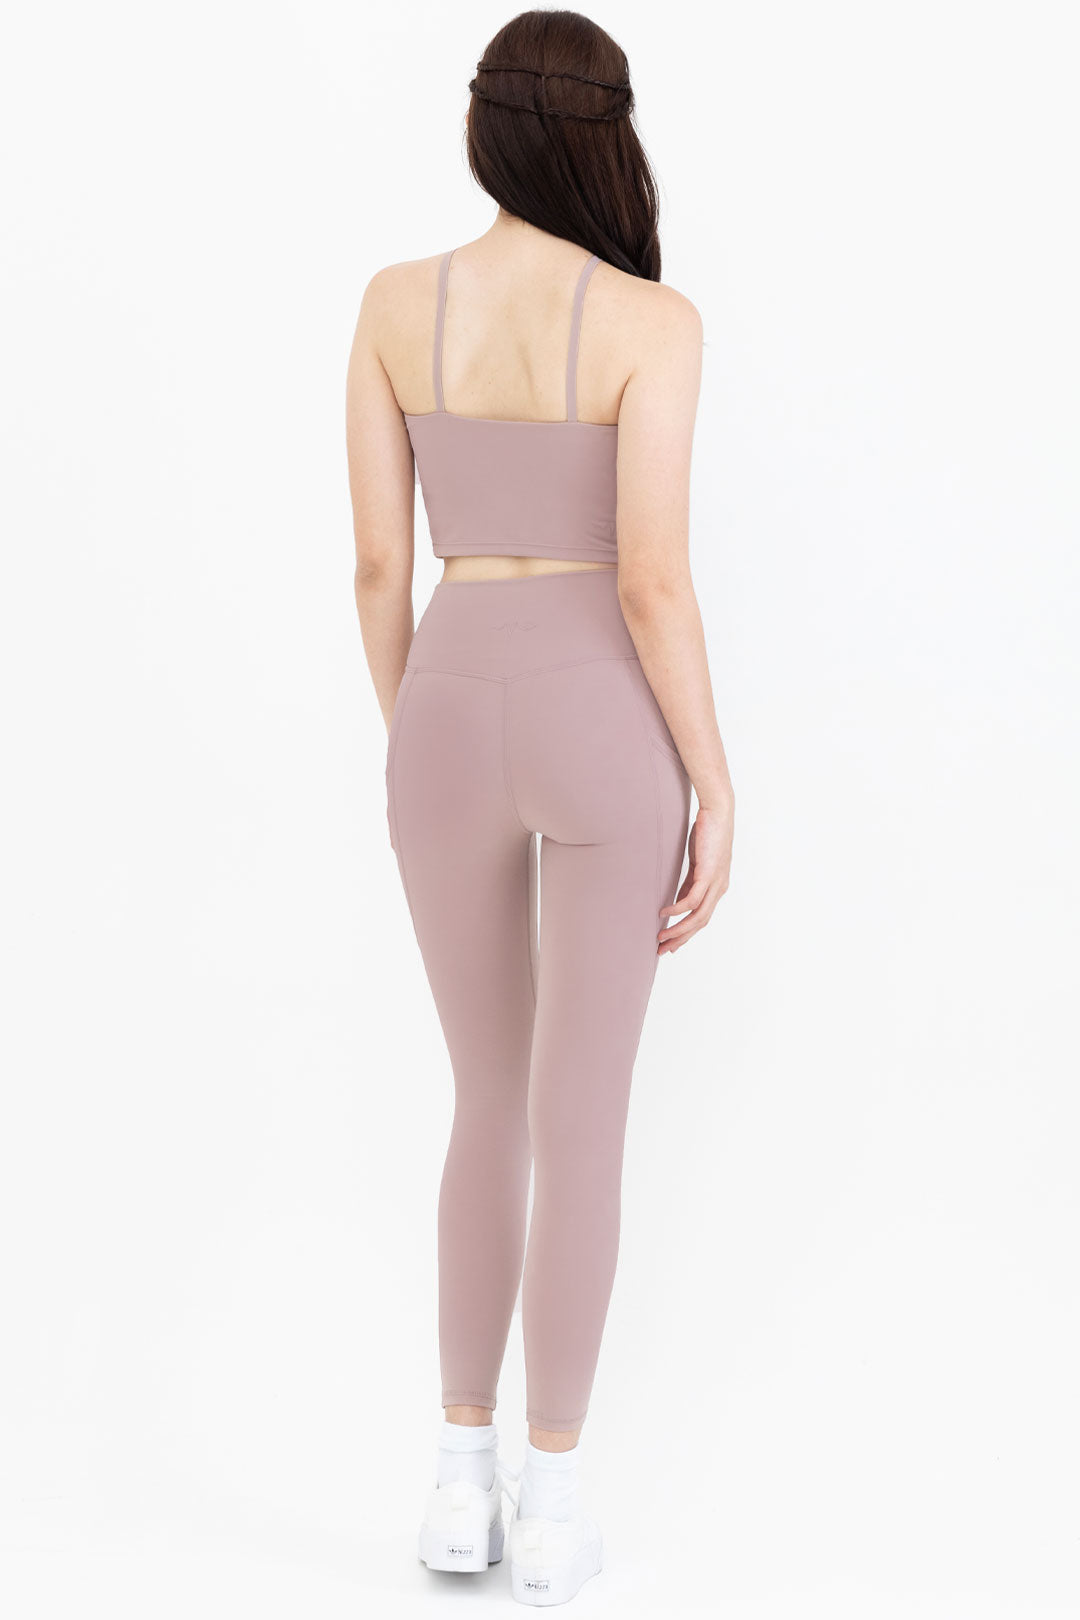 Phone pocket leggings & sports bra combo - Women's Pastel Pink – TRUEREVO